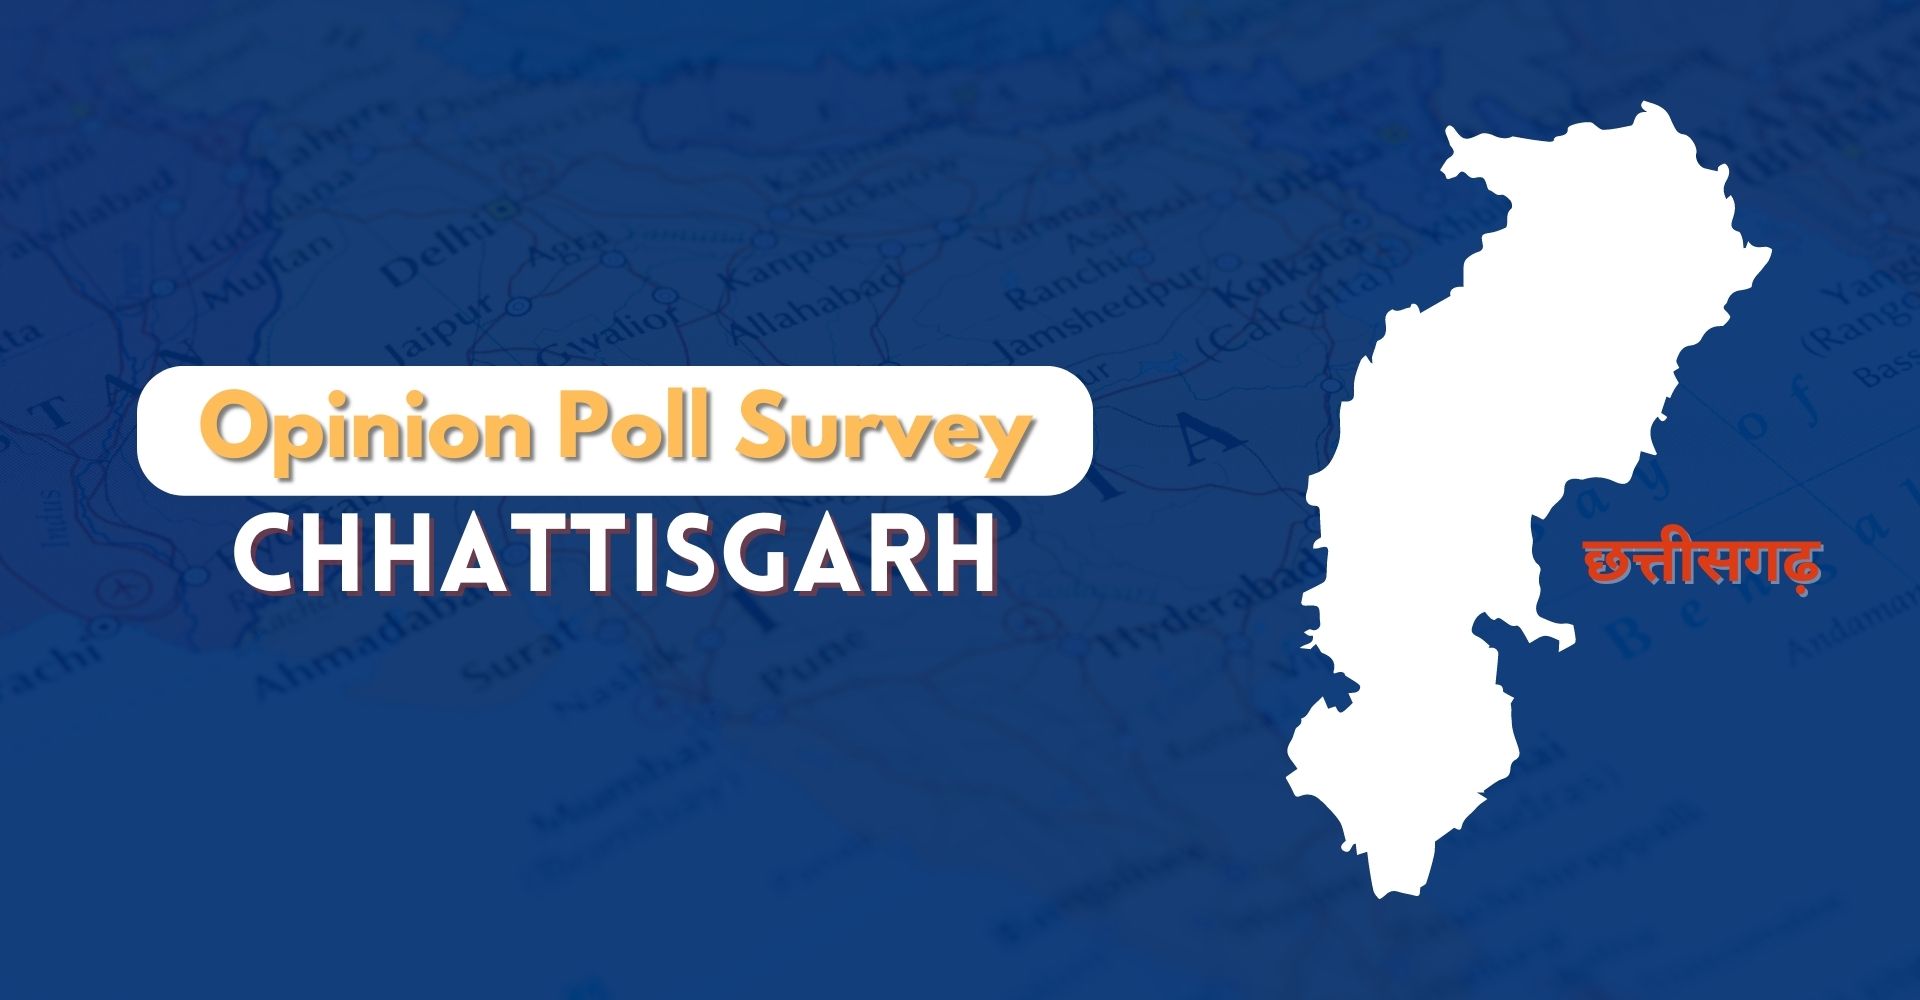 Opinion Poll Survey in Chhattisgarh Election